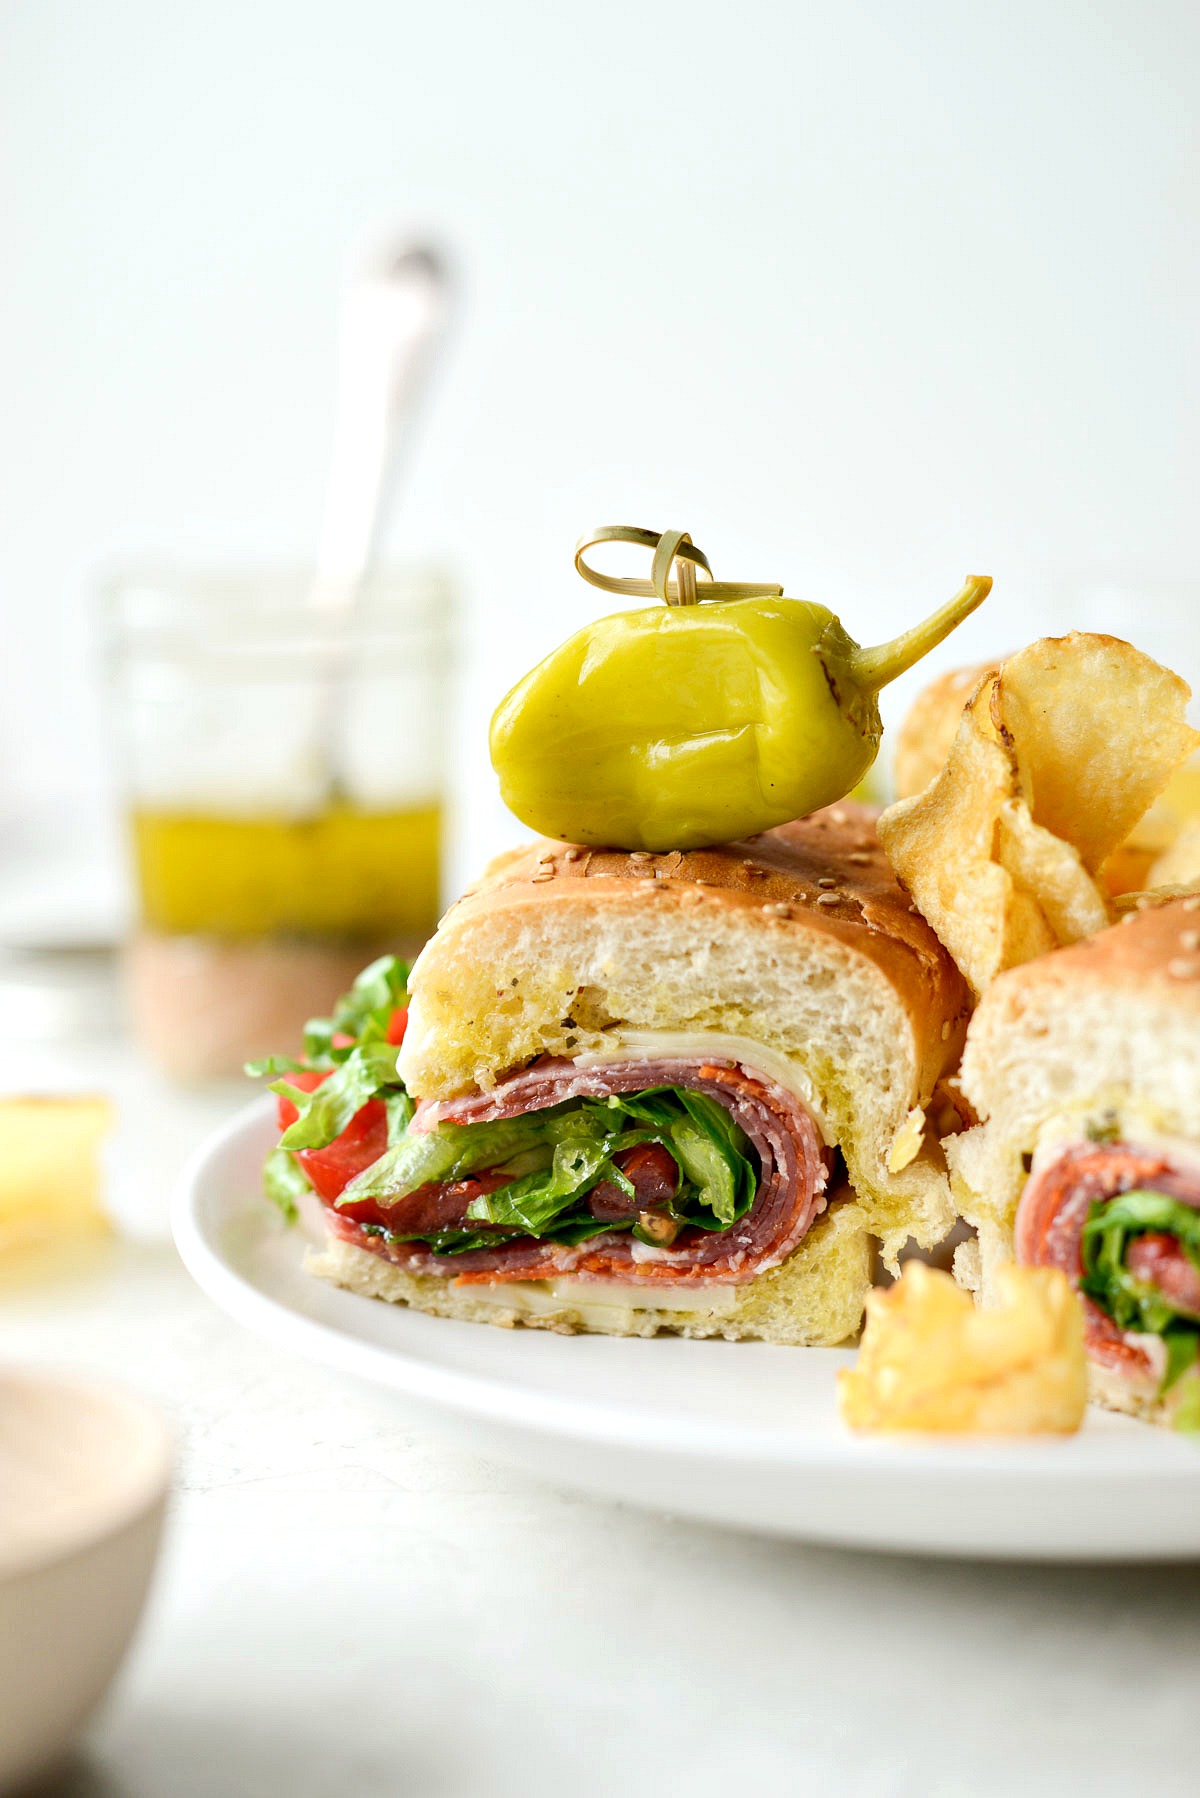 https://www.simplyscratch.com/wp-content/uploads/2020/07/Italian-Sub-Sandwiches-l-SimplyScratch.com-italian-submarine-sandwich-lunch-easy-italiandressing-19.jpg